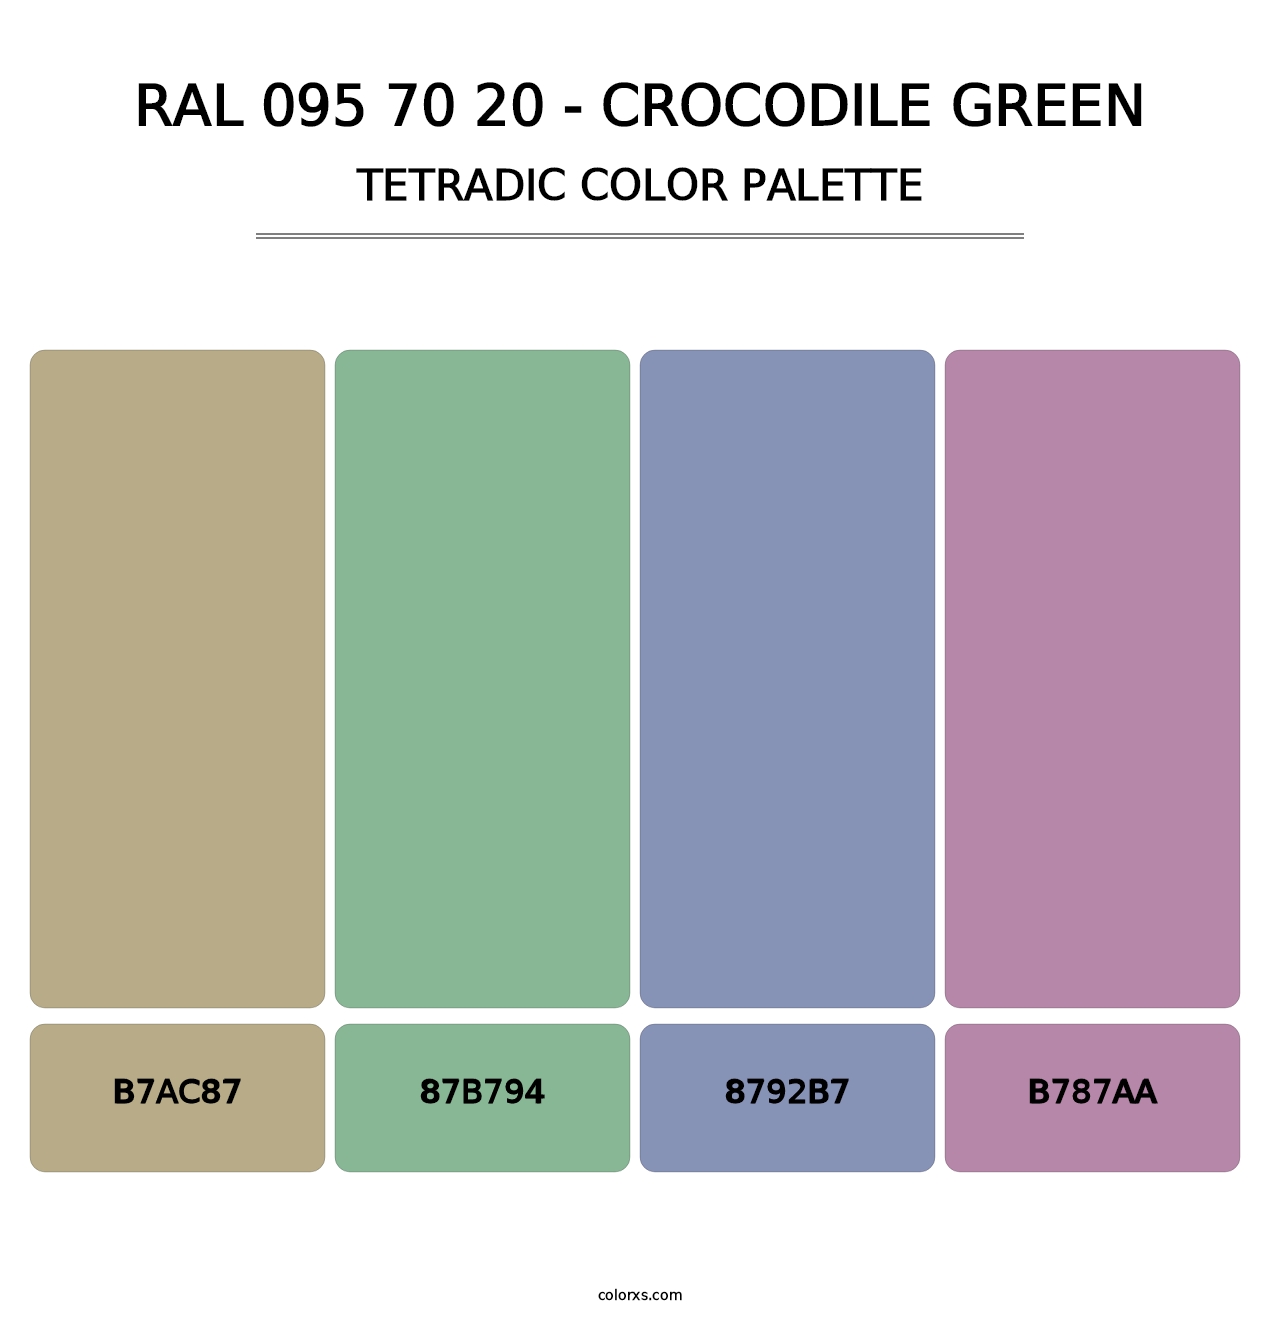 RAL 095 70 20 - Crocodile Green - Tetradic Color Palette